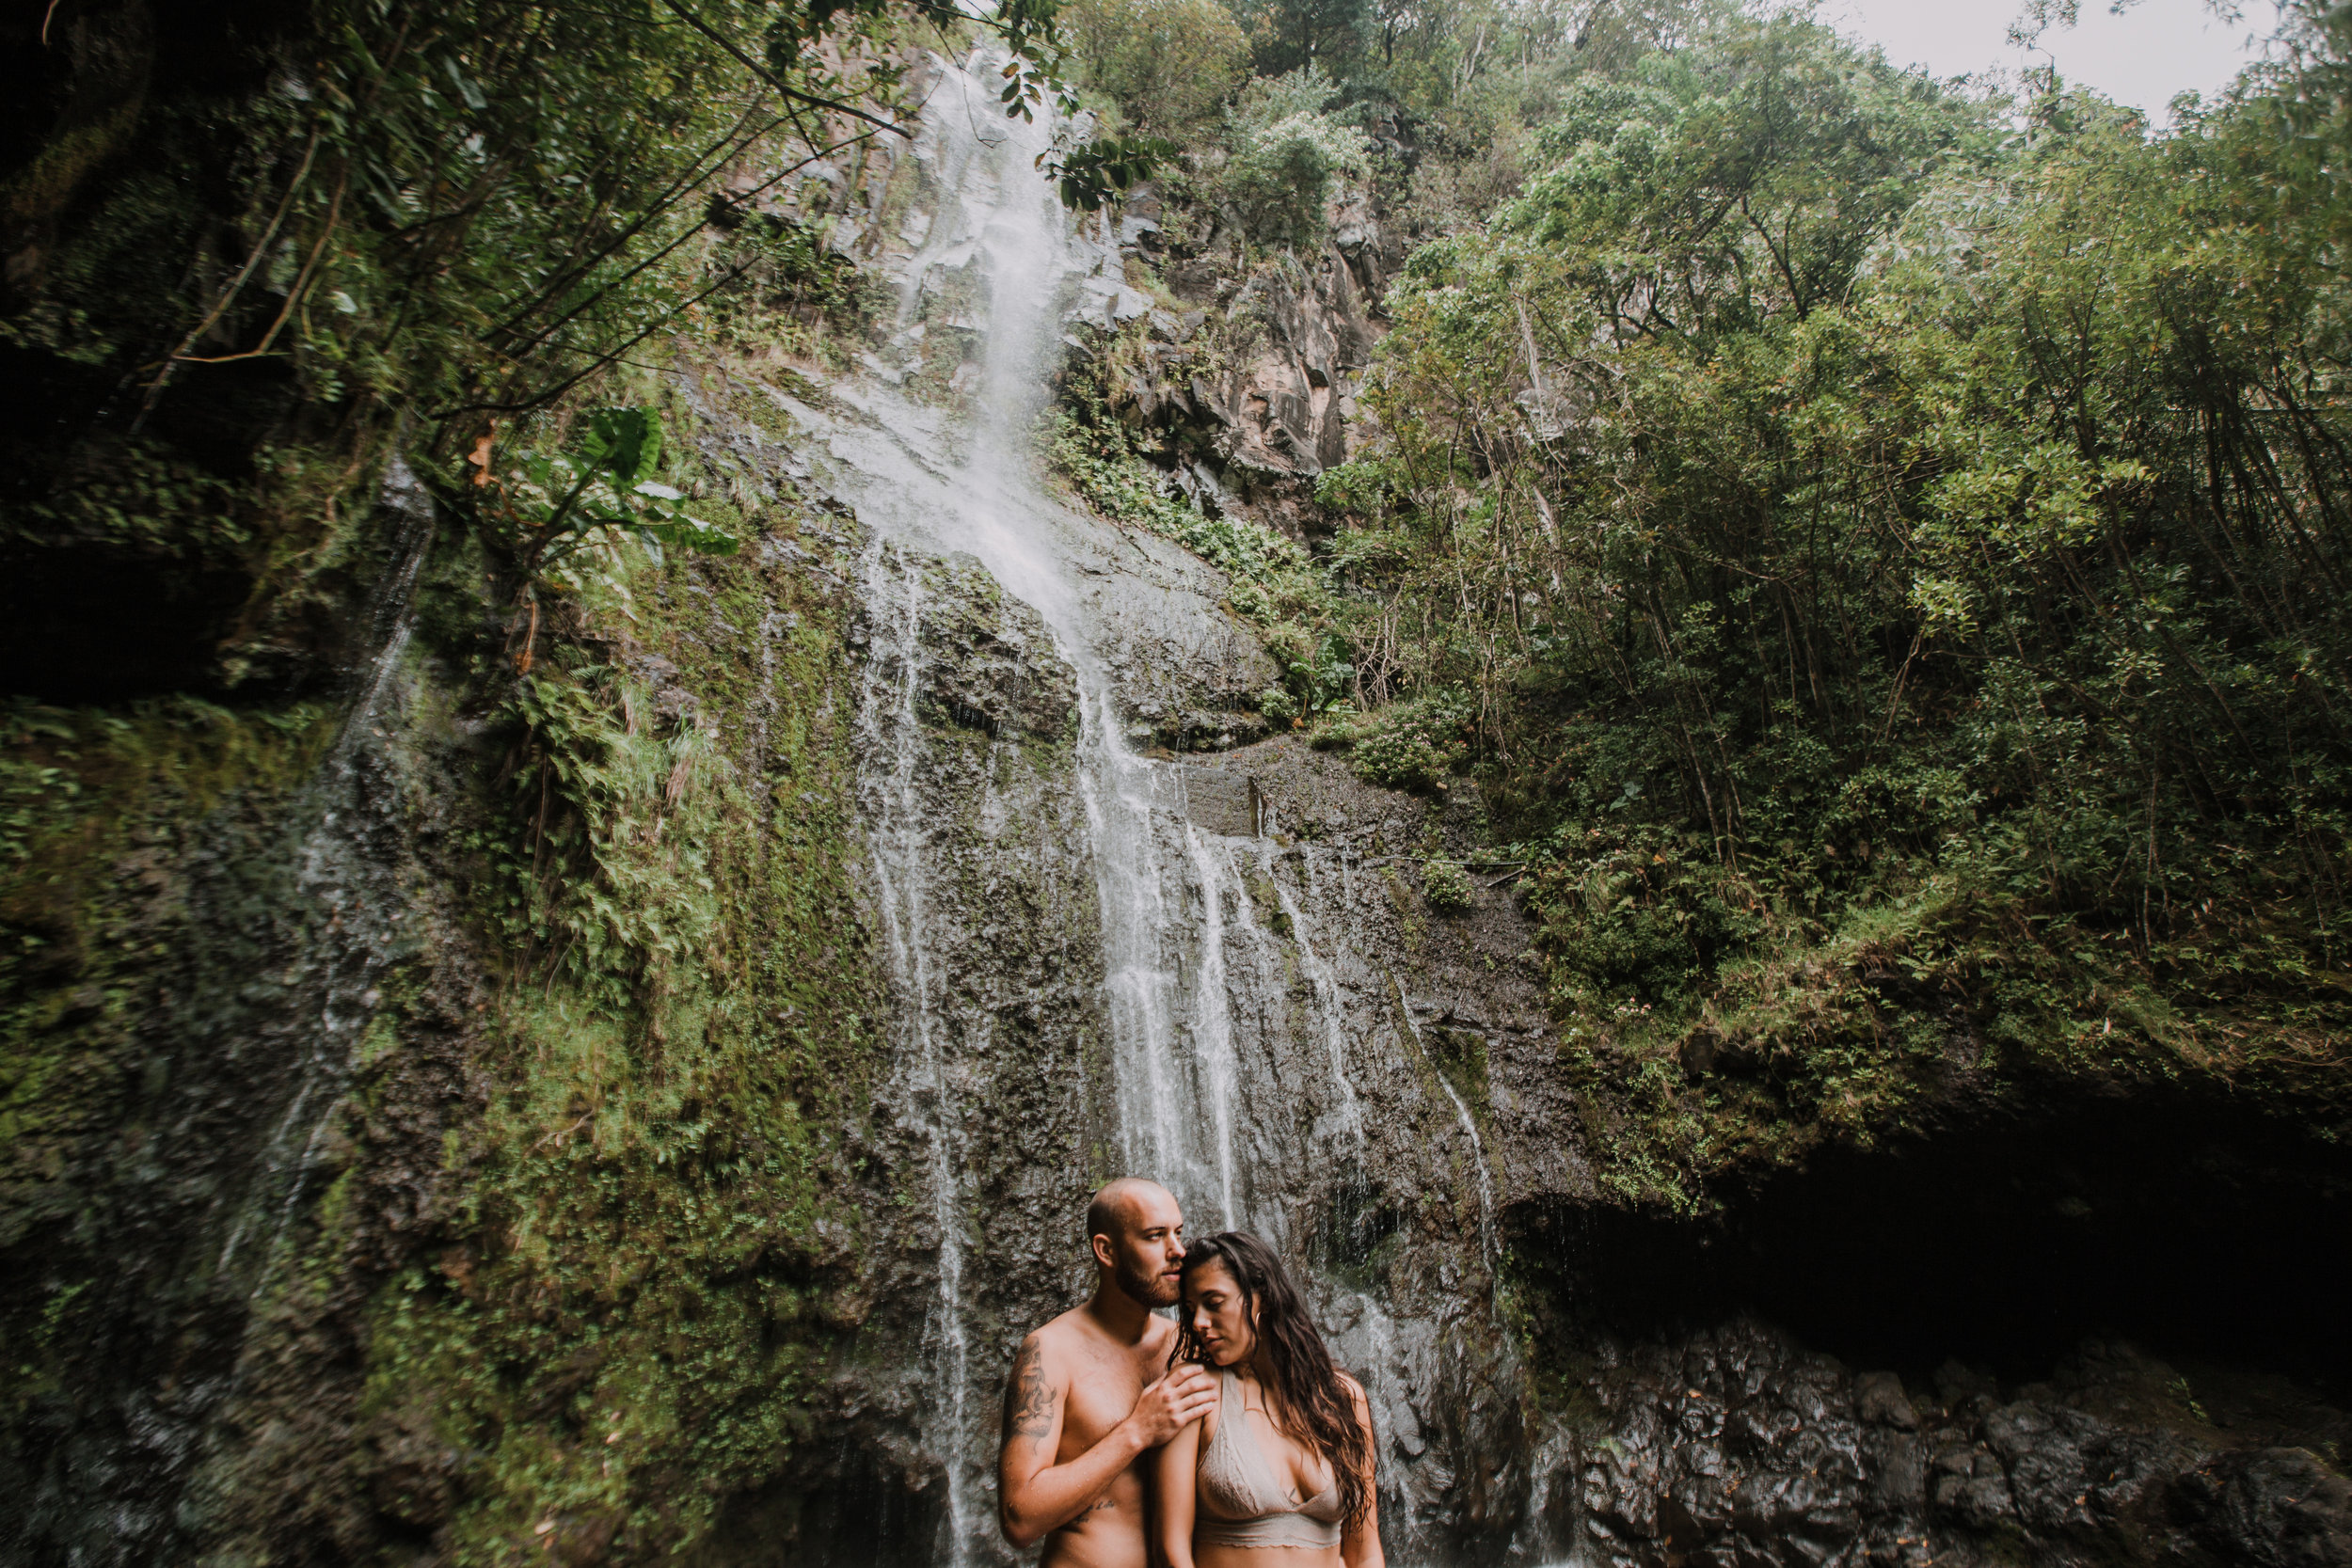 hana maui waterfall engagements, hawaii waterfall, road to hana, maui waterfall, hawaii wedding photographer, hawaii elopement photographer, maui wedding, maui engagements, maui elopement